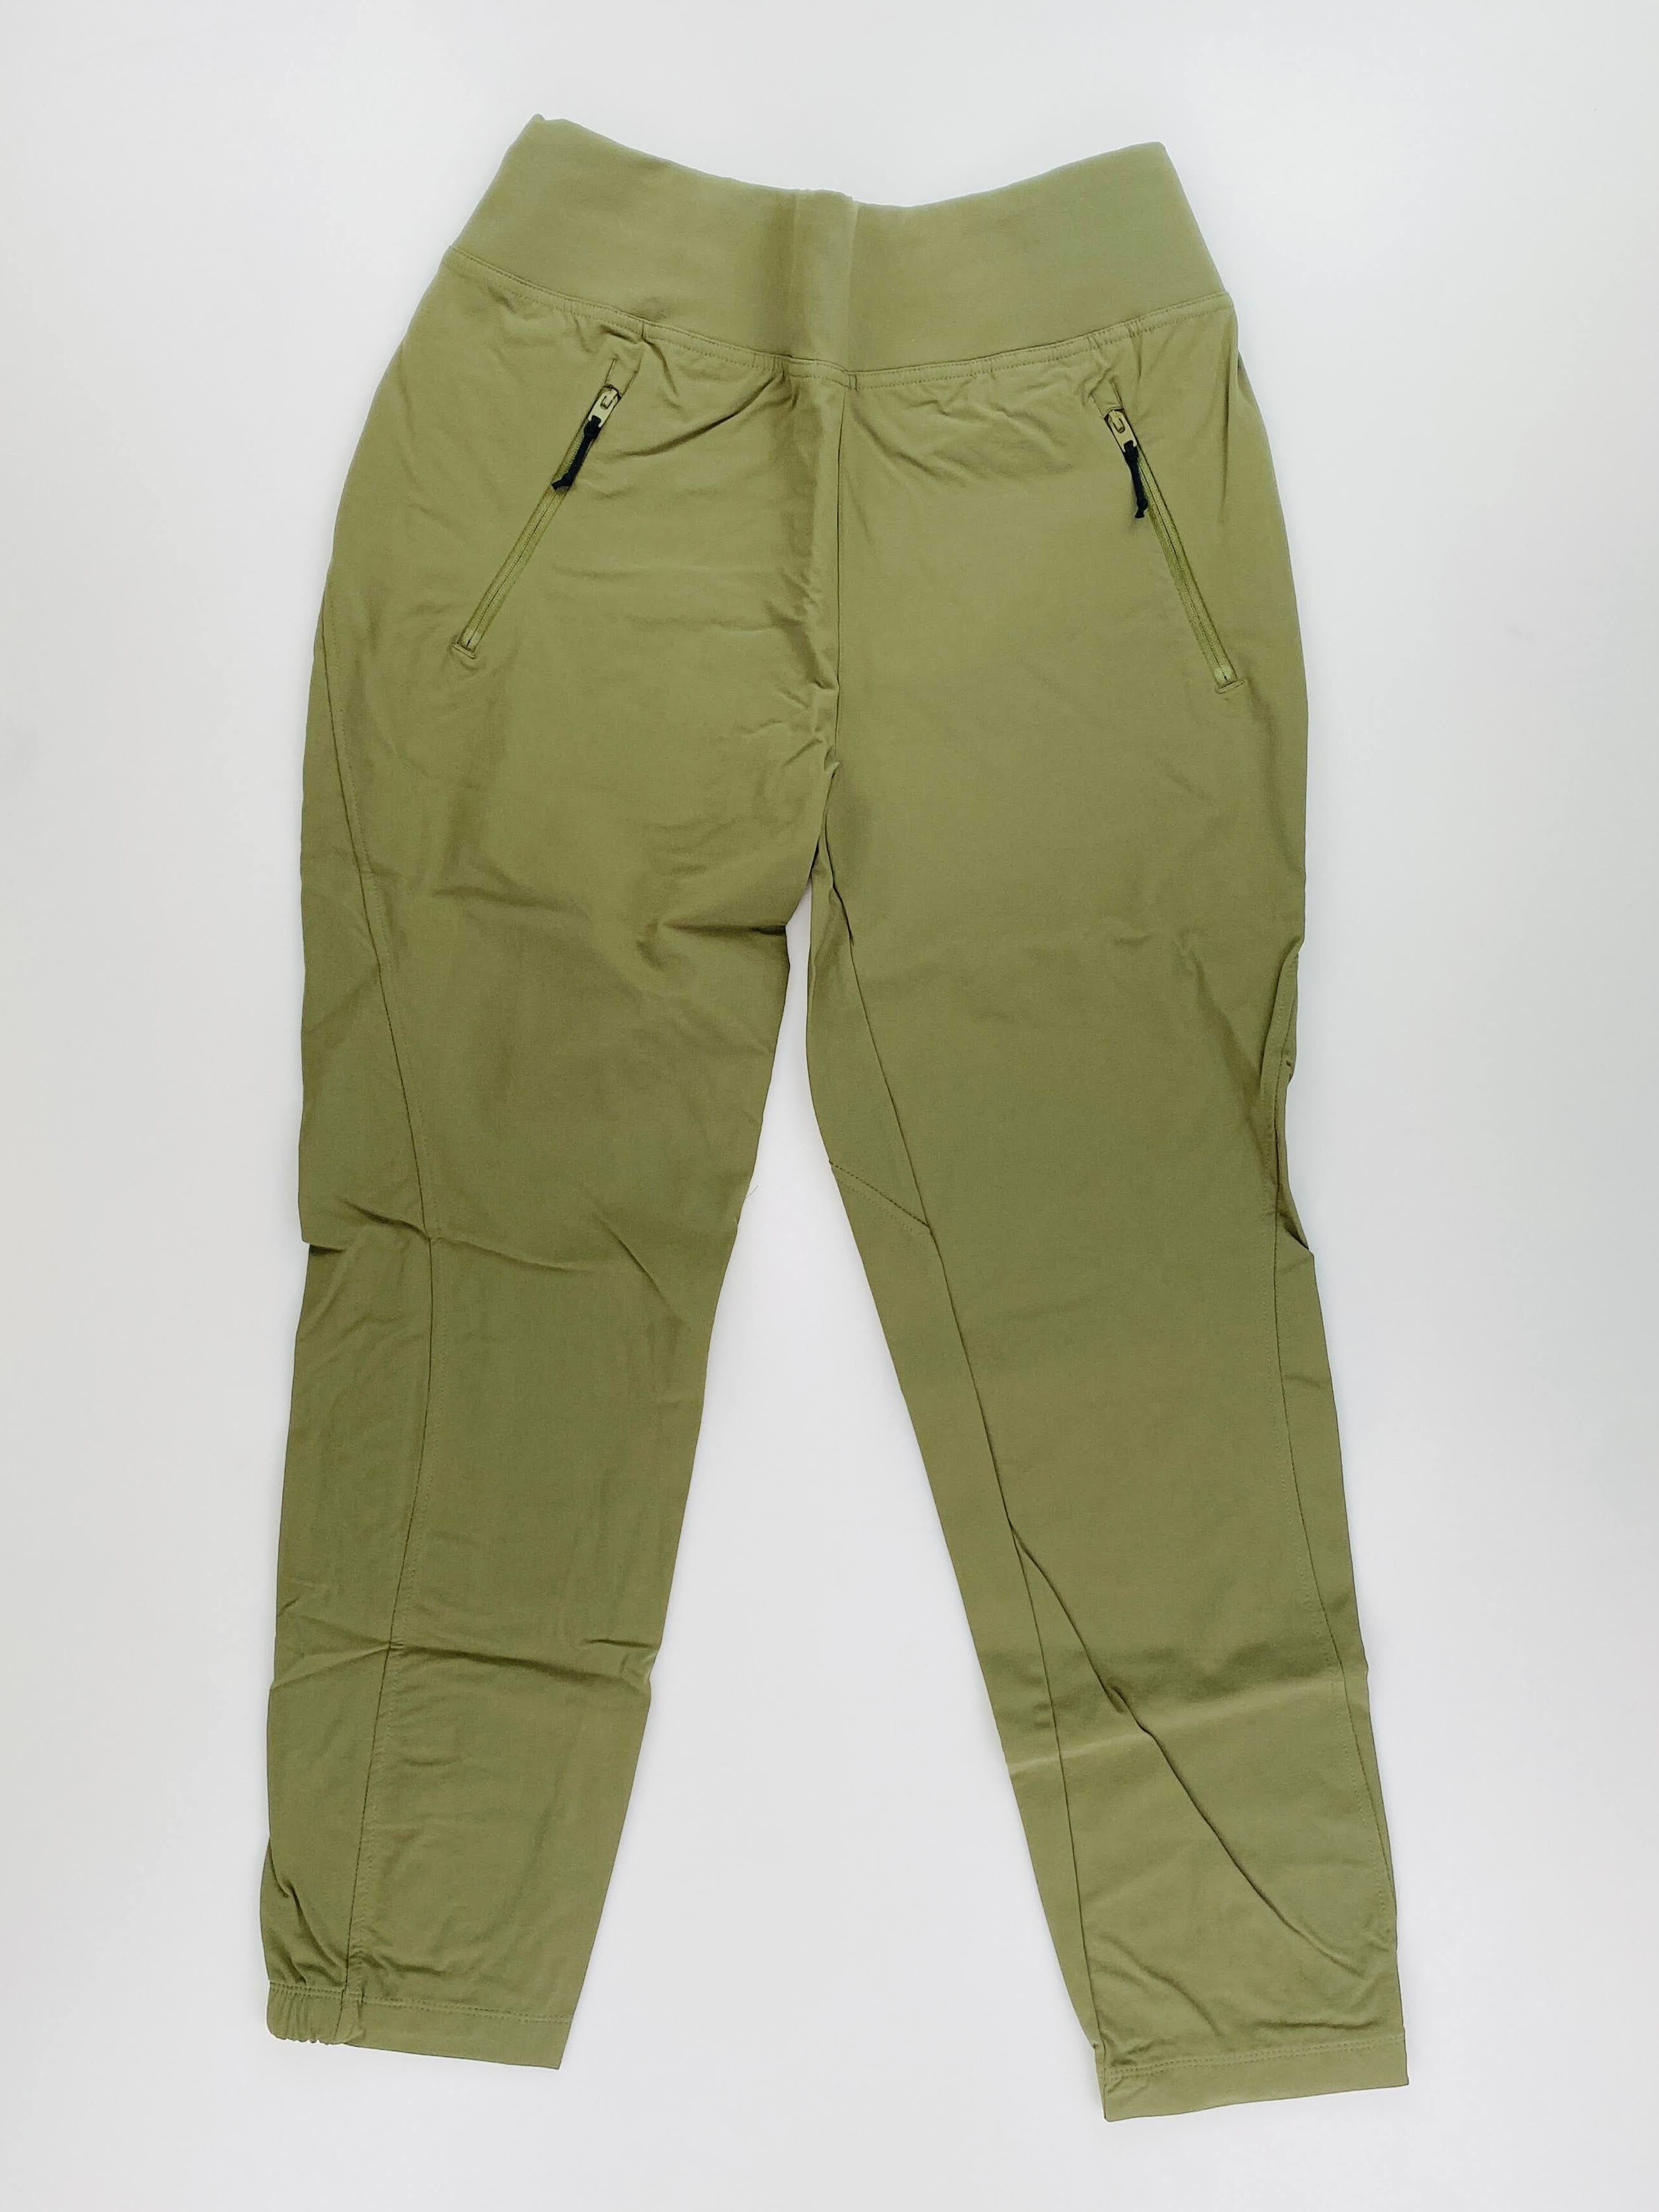 Mountain Hardwear Chockstone™ Women's Pull On Pant Regular - Seconde main Pantalon femme - Vert olive - XS | Hardloop